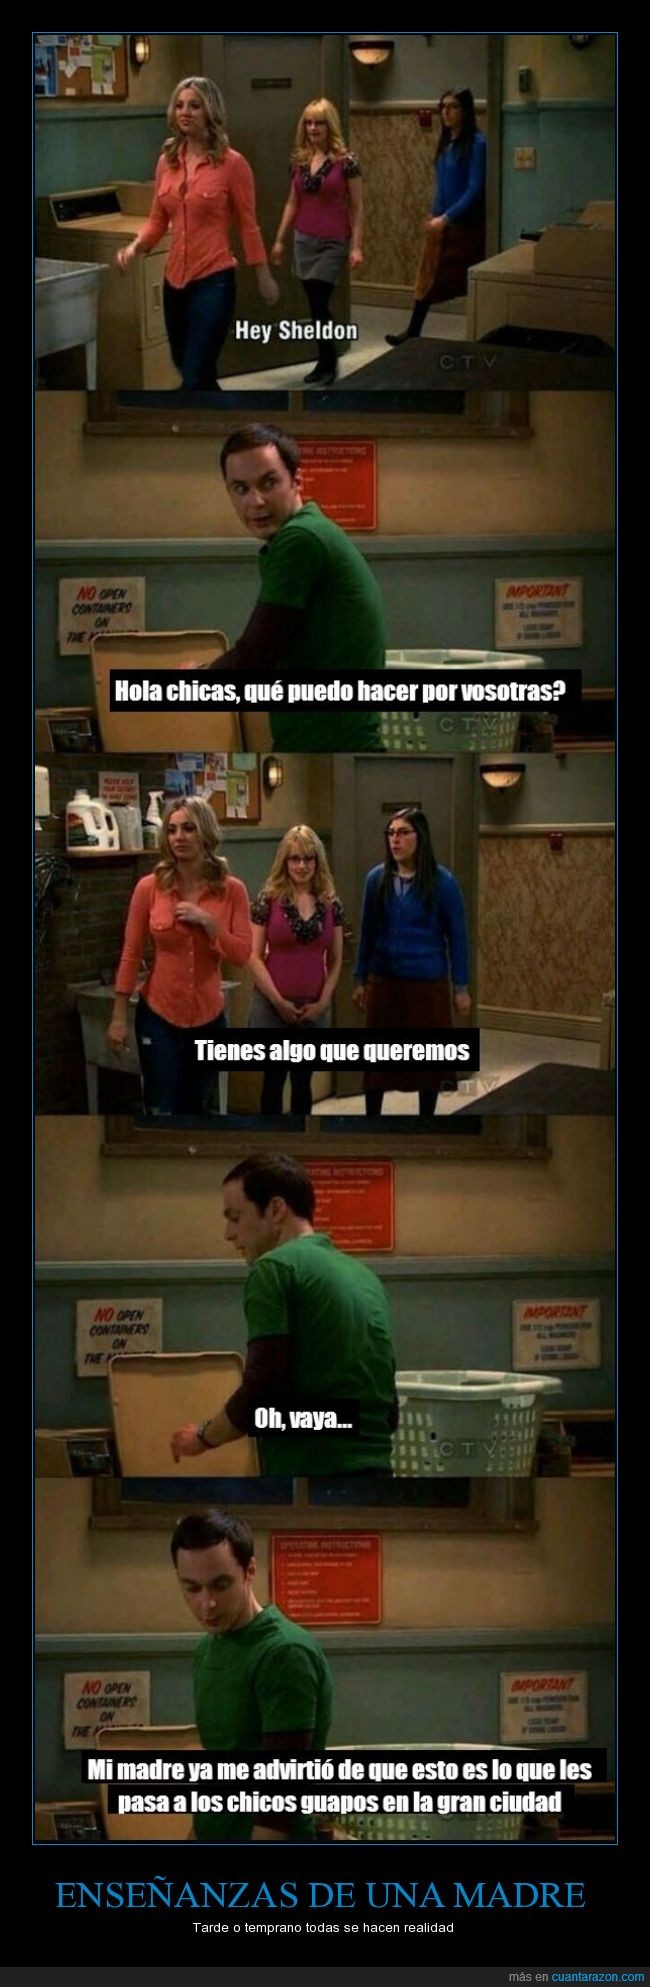 Sheldon cooper,chicas,algo,querer,madre,chico,guapo,gran,ciudad,abusar,religion